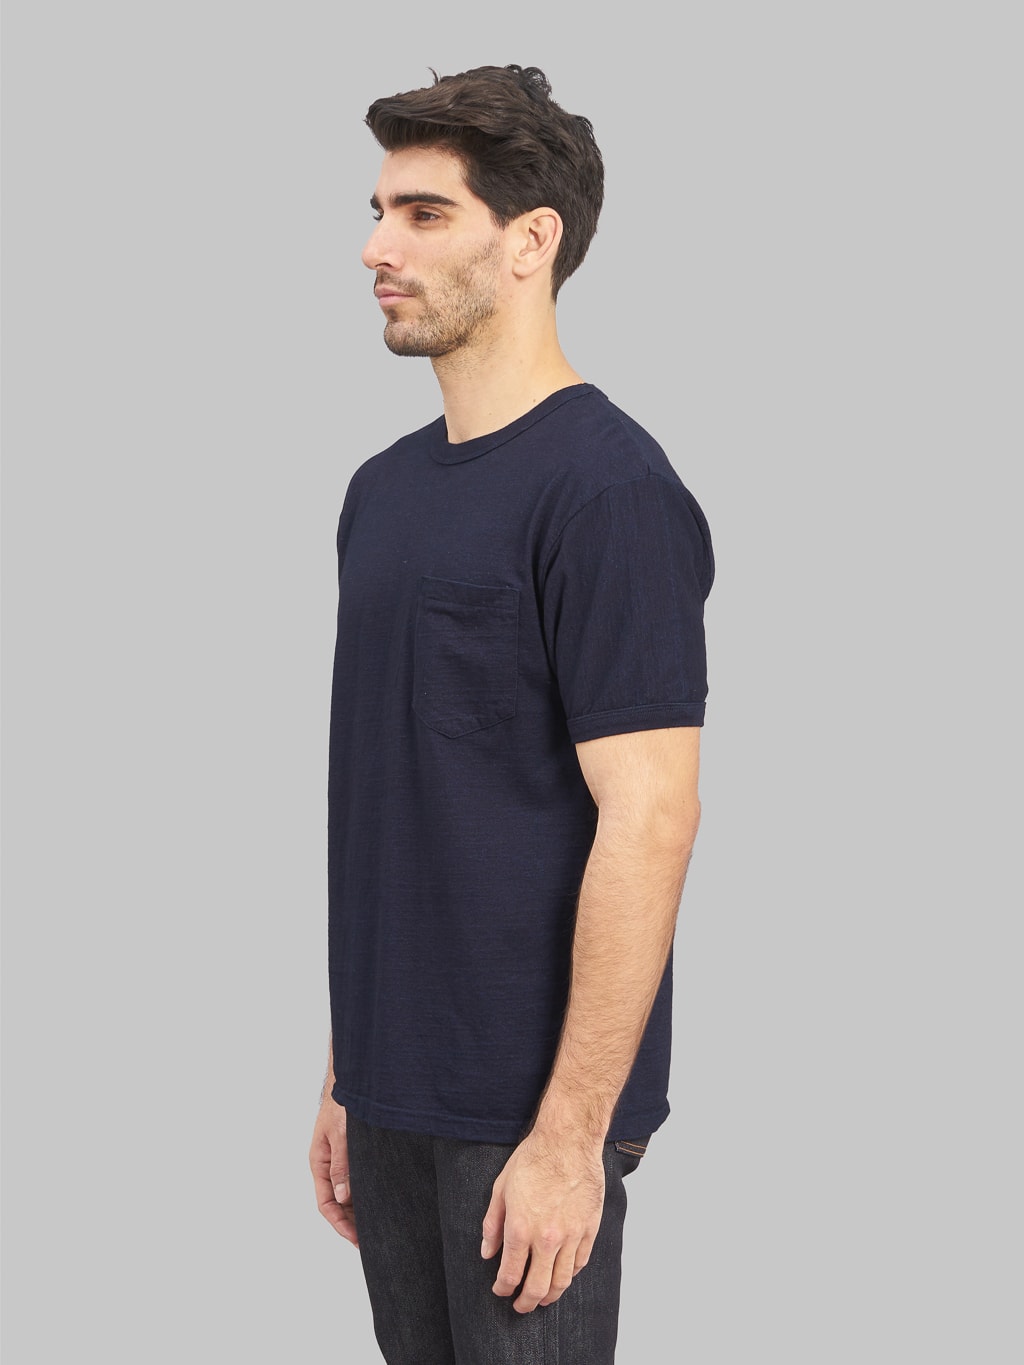 UES Indigo Pocket Tshirt  model side fit